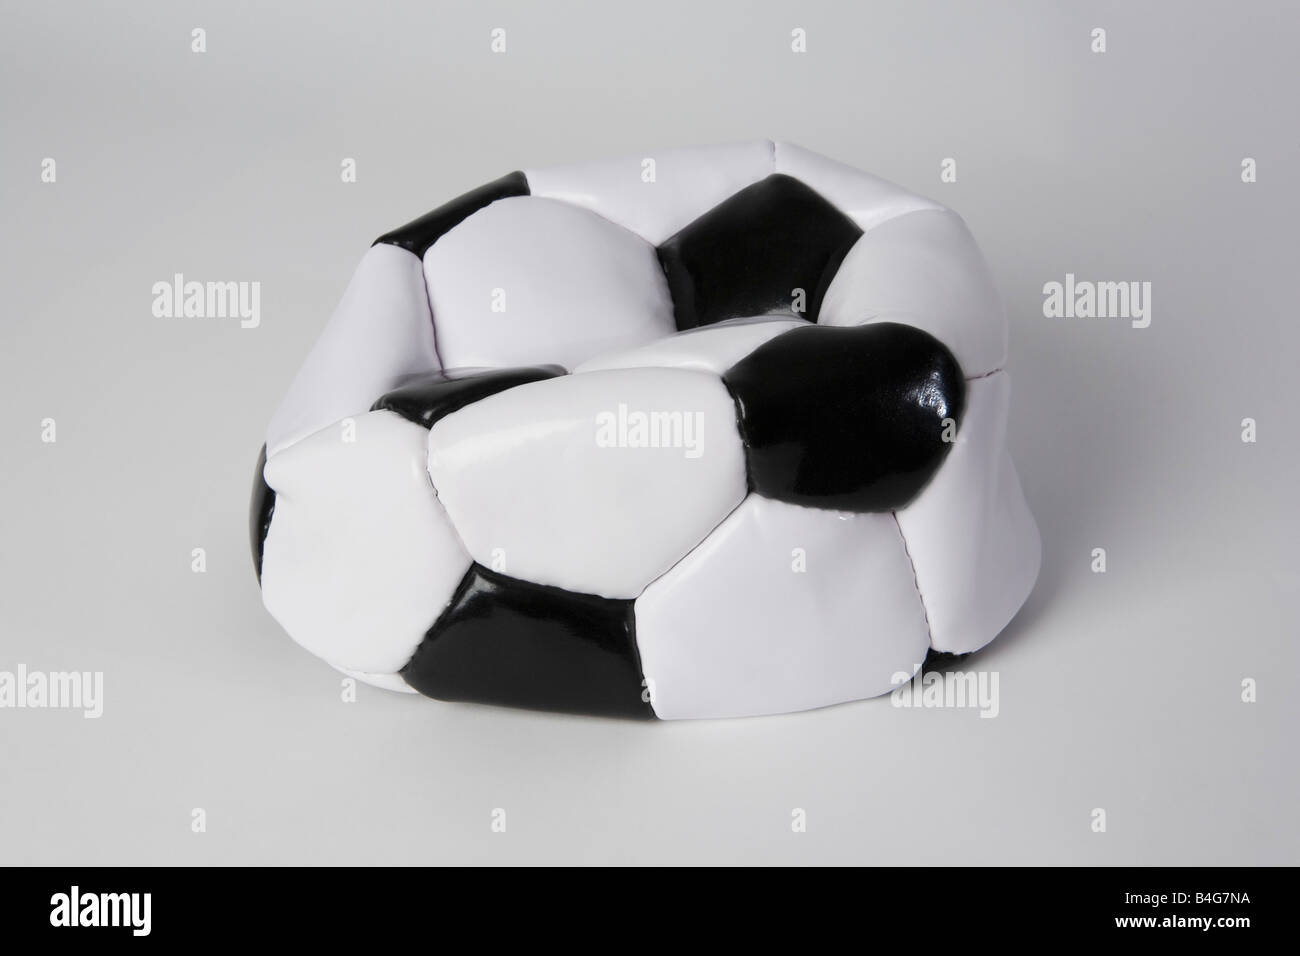 Un balón de fútbol desinflado Fotografía de stock - Alamy